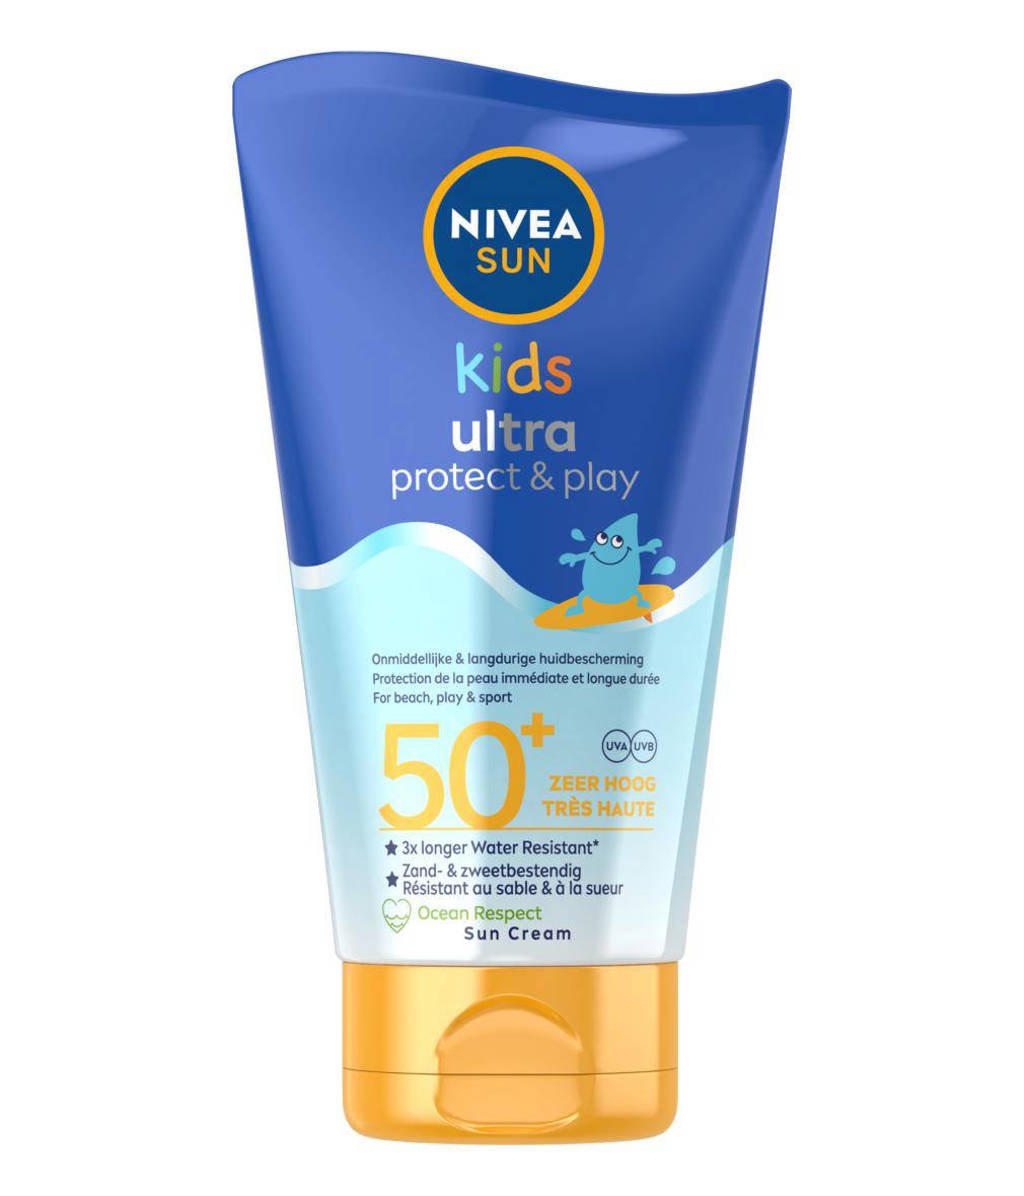 Opknappen Sada lettergreep NIVEA SUN Kids Ultra Protect & Moisture zonnebrand SPF50 - 150 ml | wehkamp